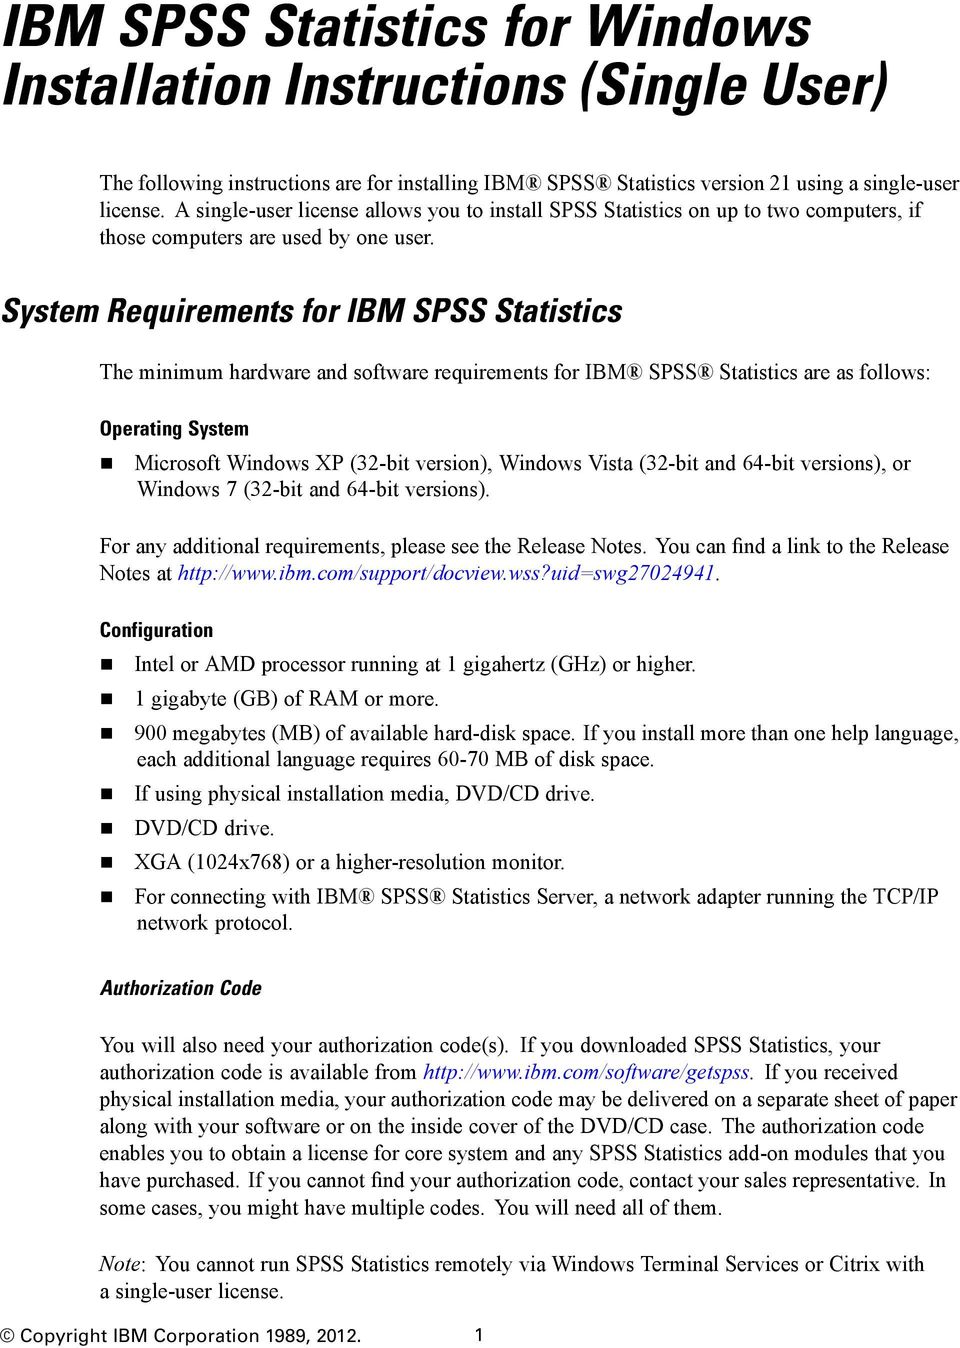 IBM SPSS Statistics 21 X64